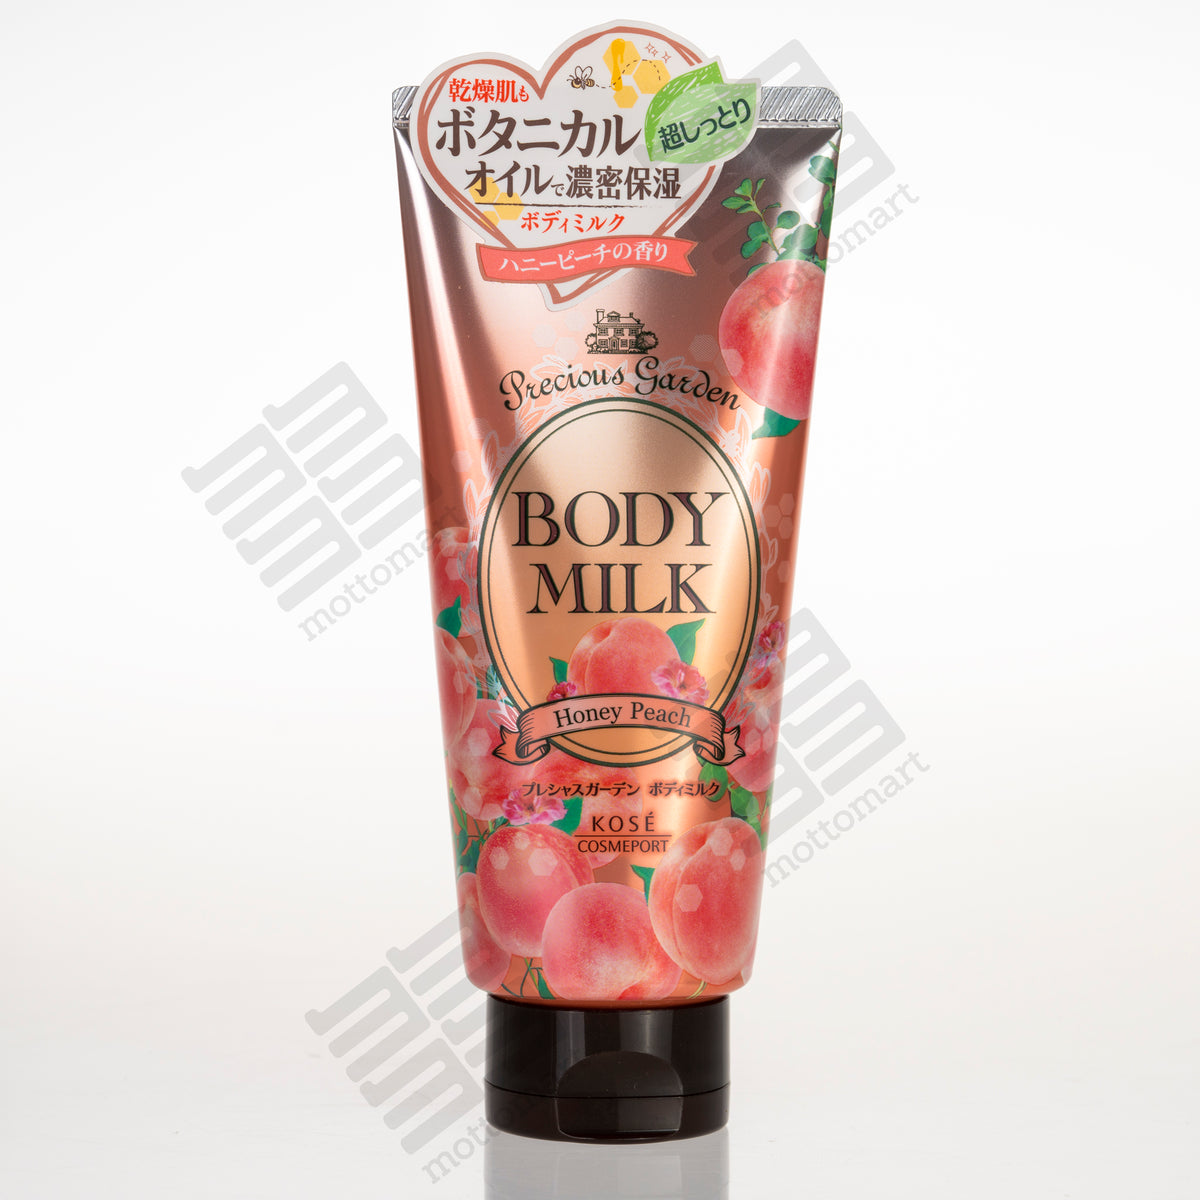 KOSE Secret Garden Body Lotion - Honey Peach (200g) プレシャスガーデン ボディミルク ハ